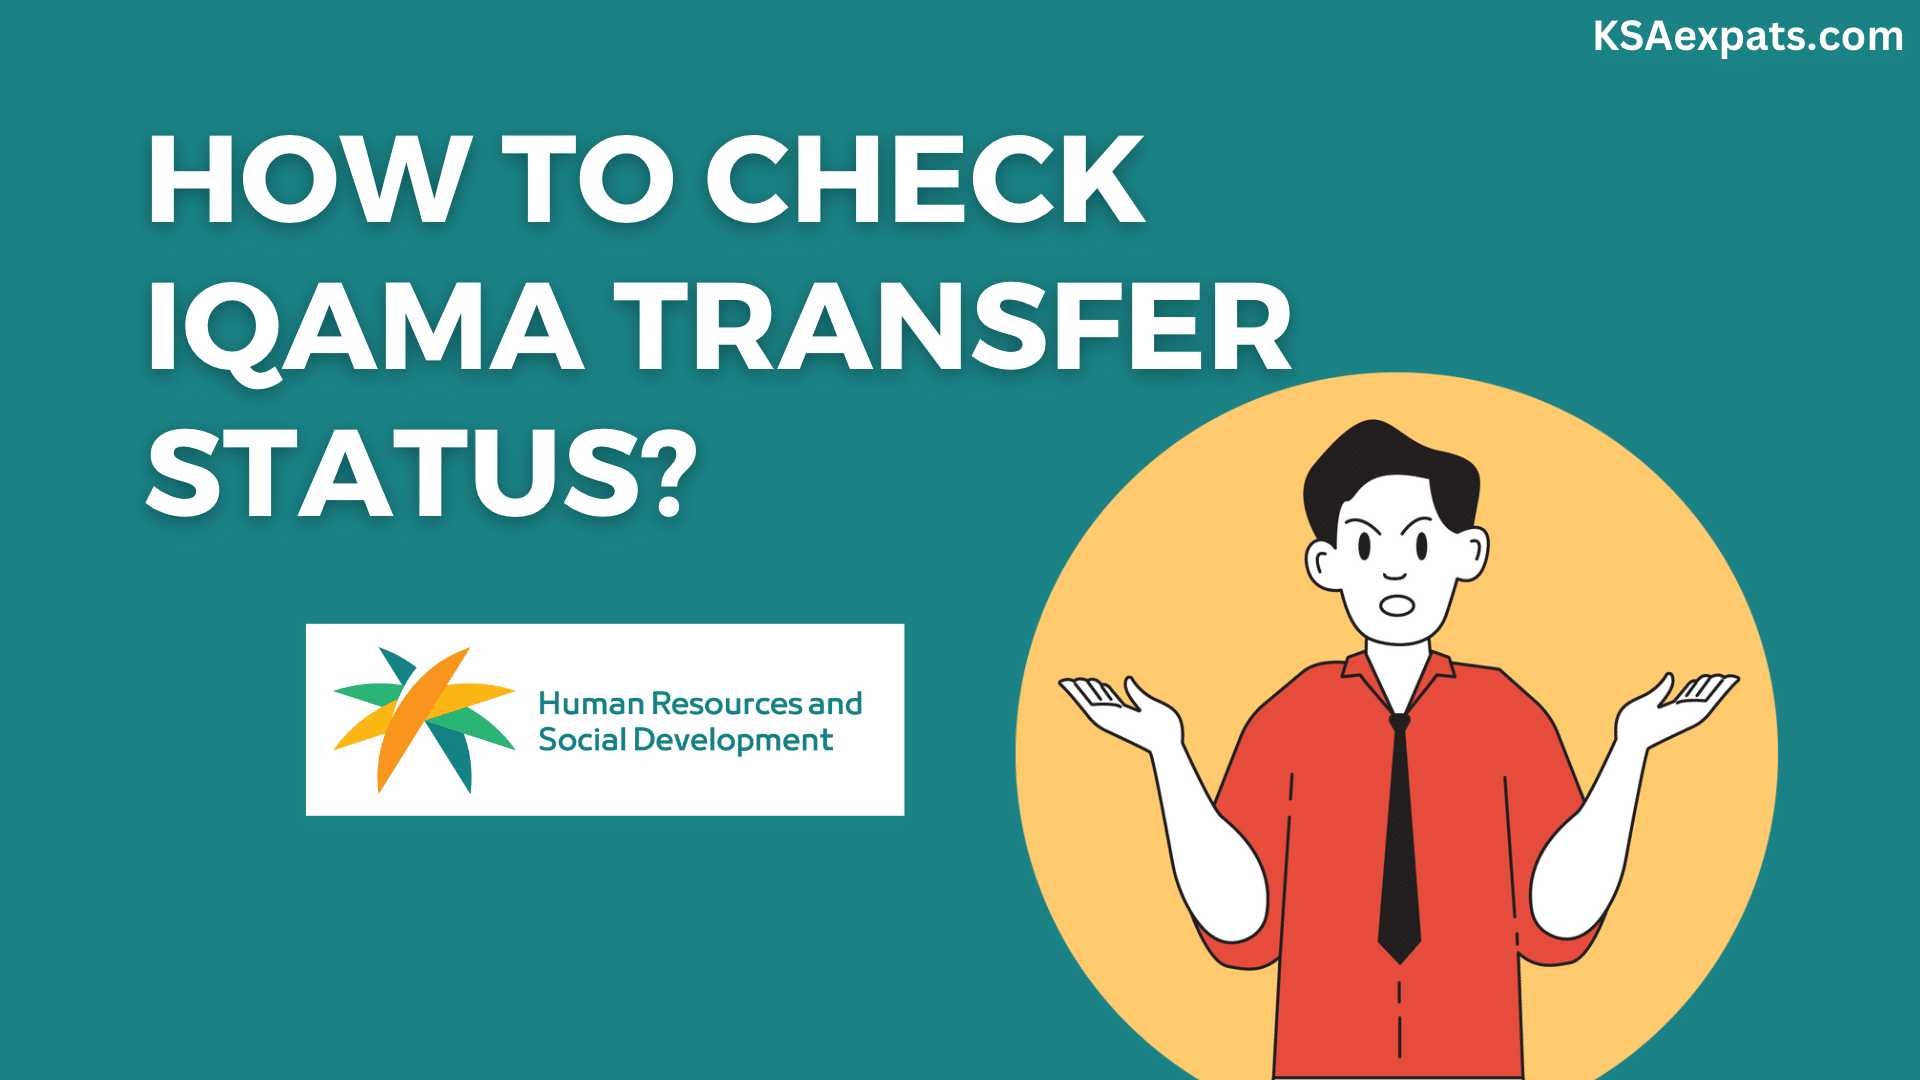 how to check iqama transfer status - naqal kafala